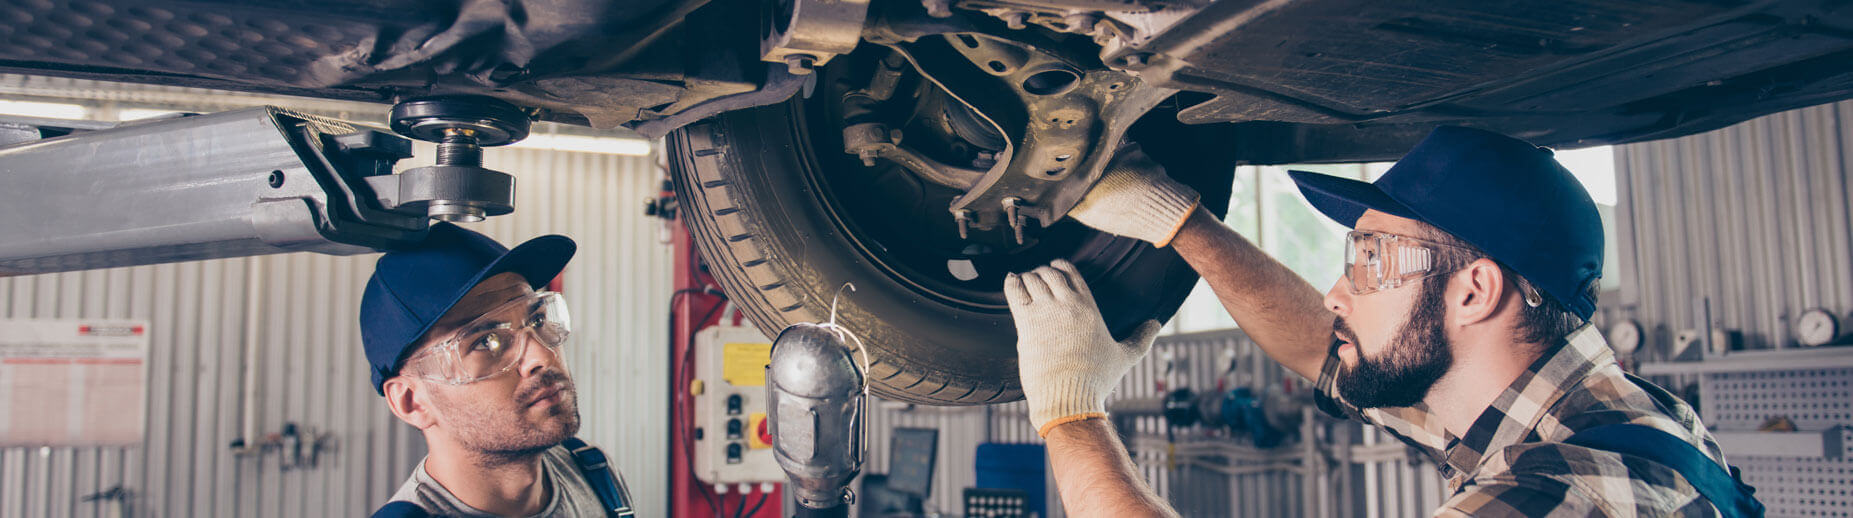 Burlington Car Repair, Auto Mechanic and Towing Service